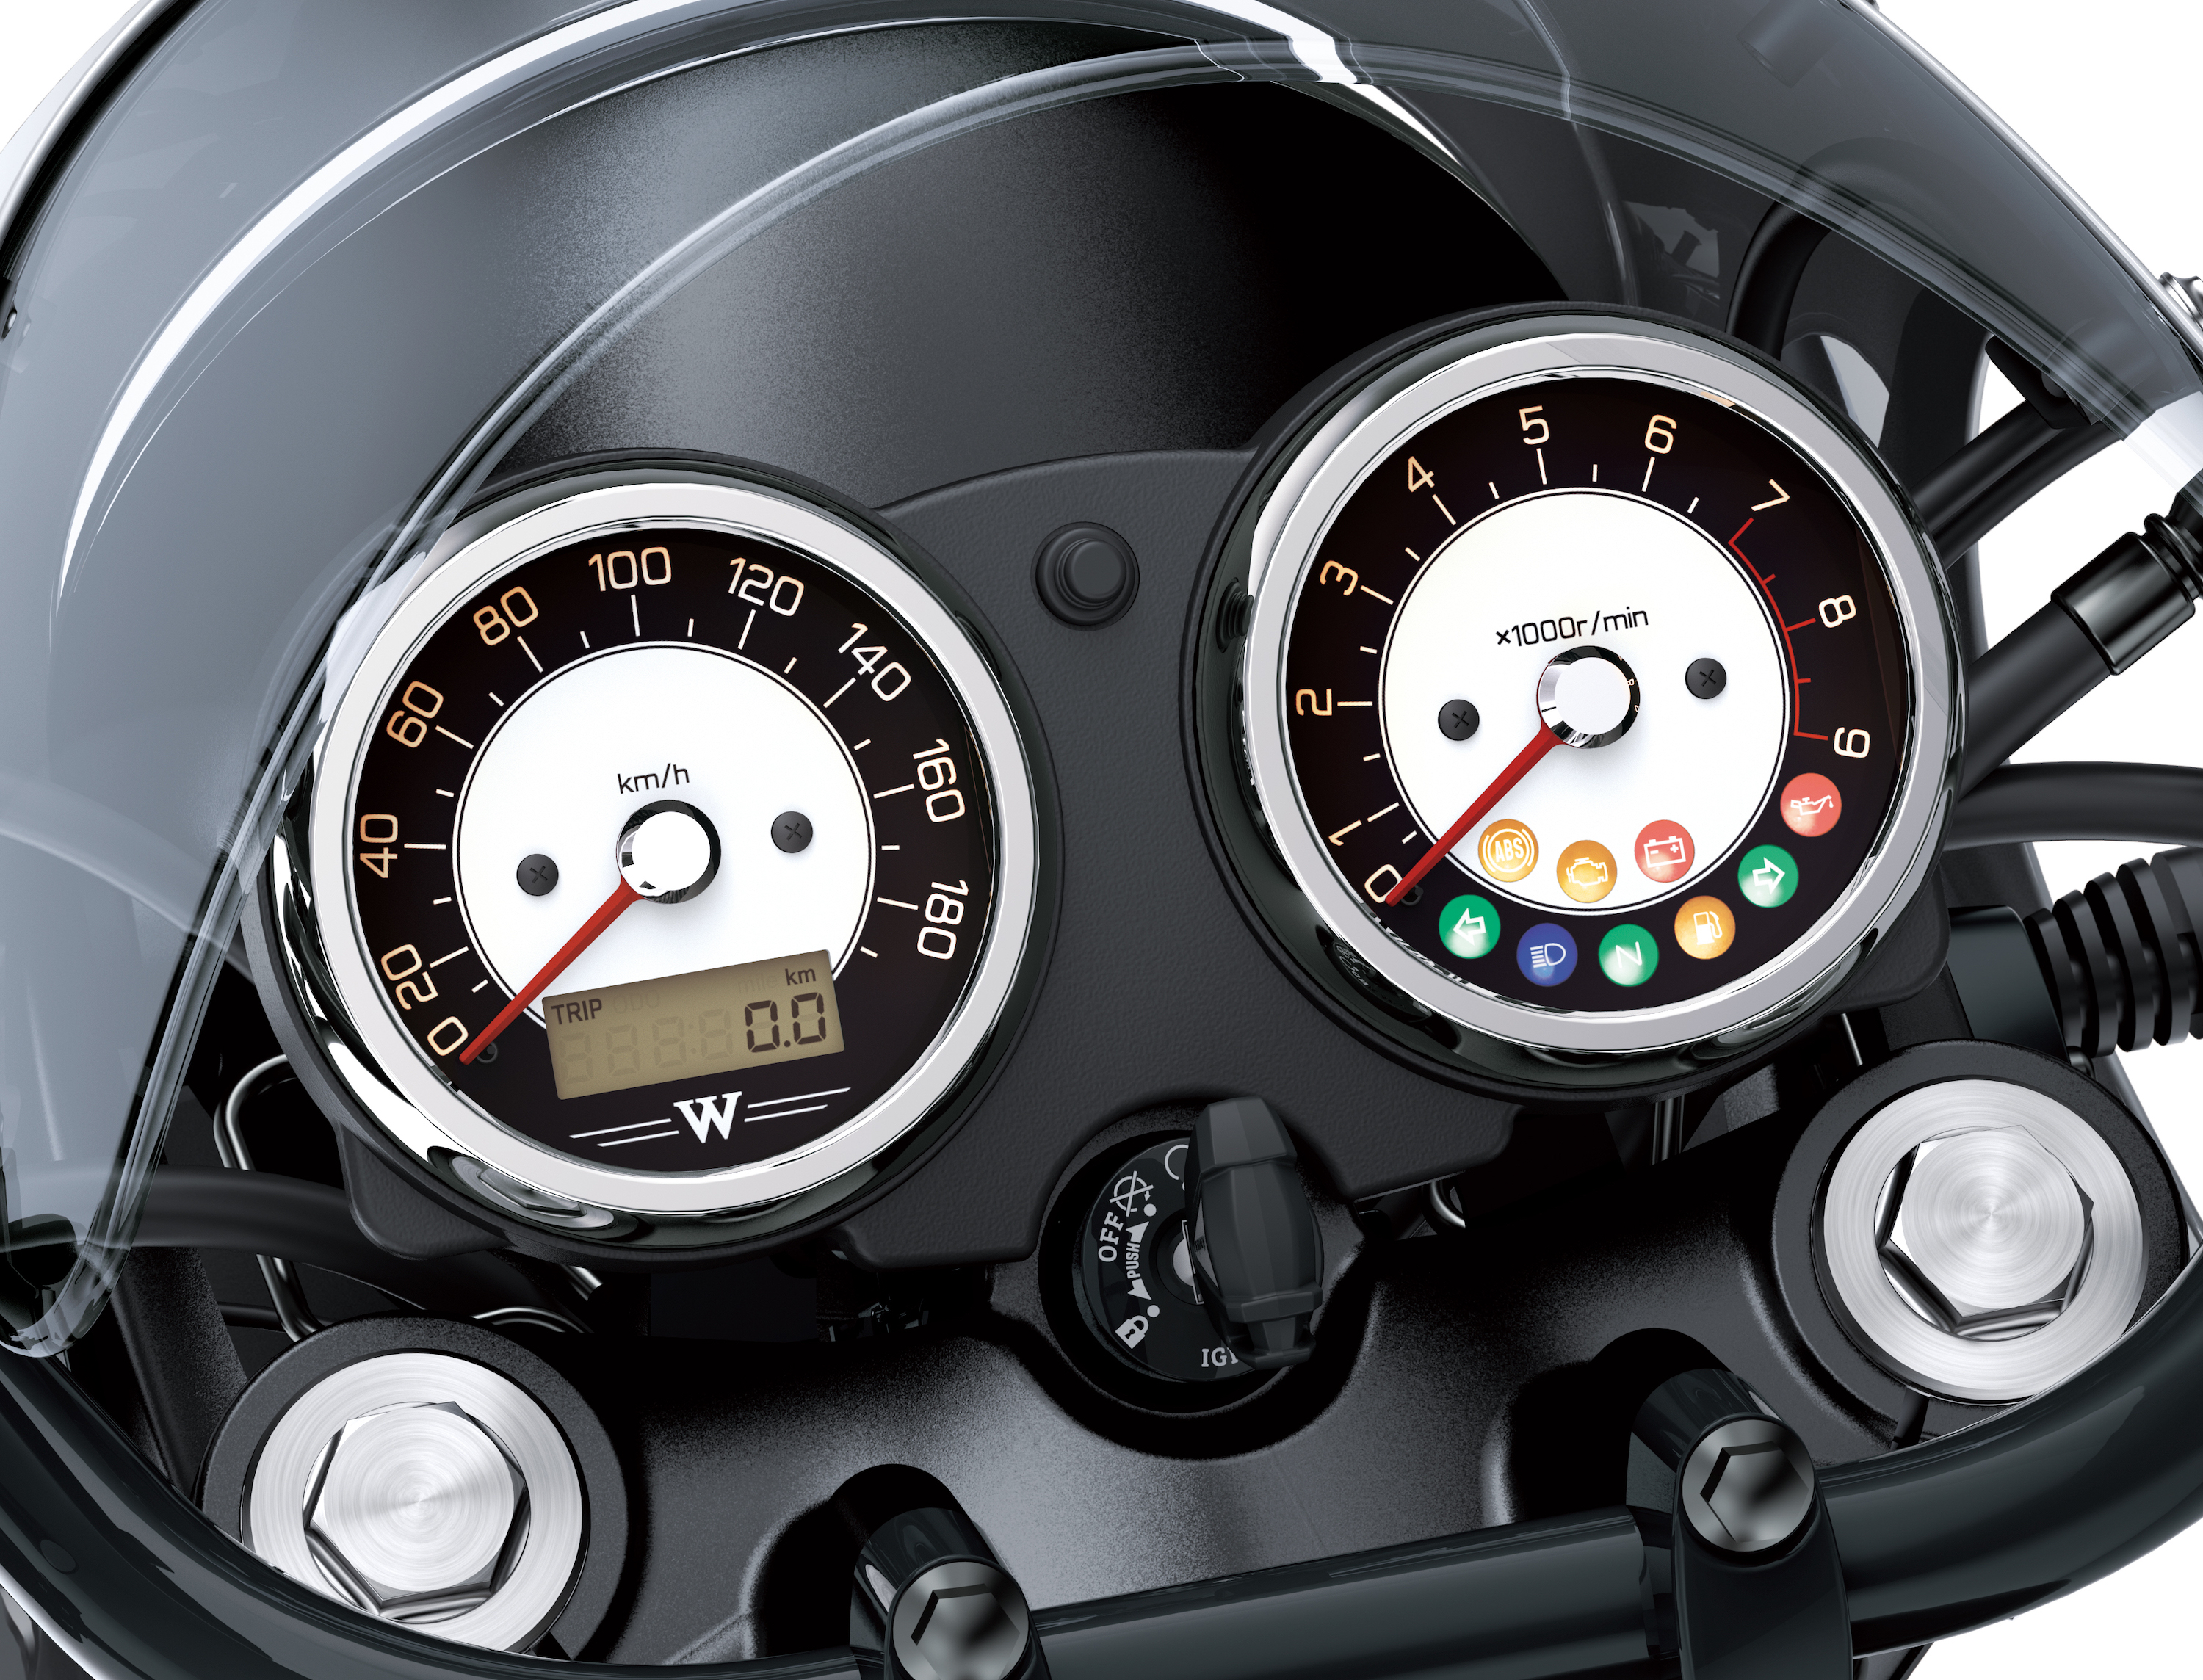 2019 Kawasaki W800 clocks